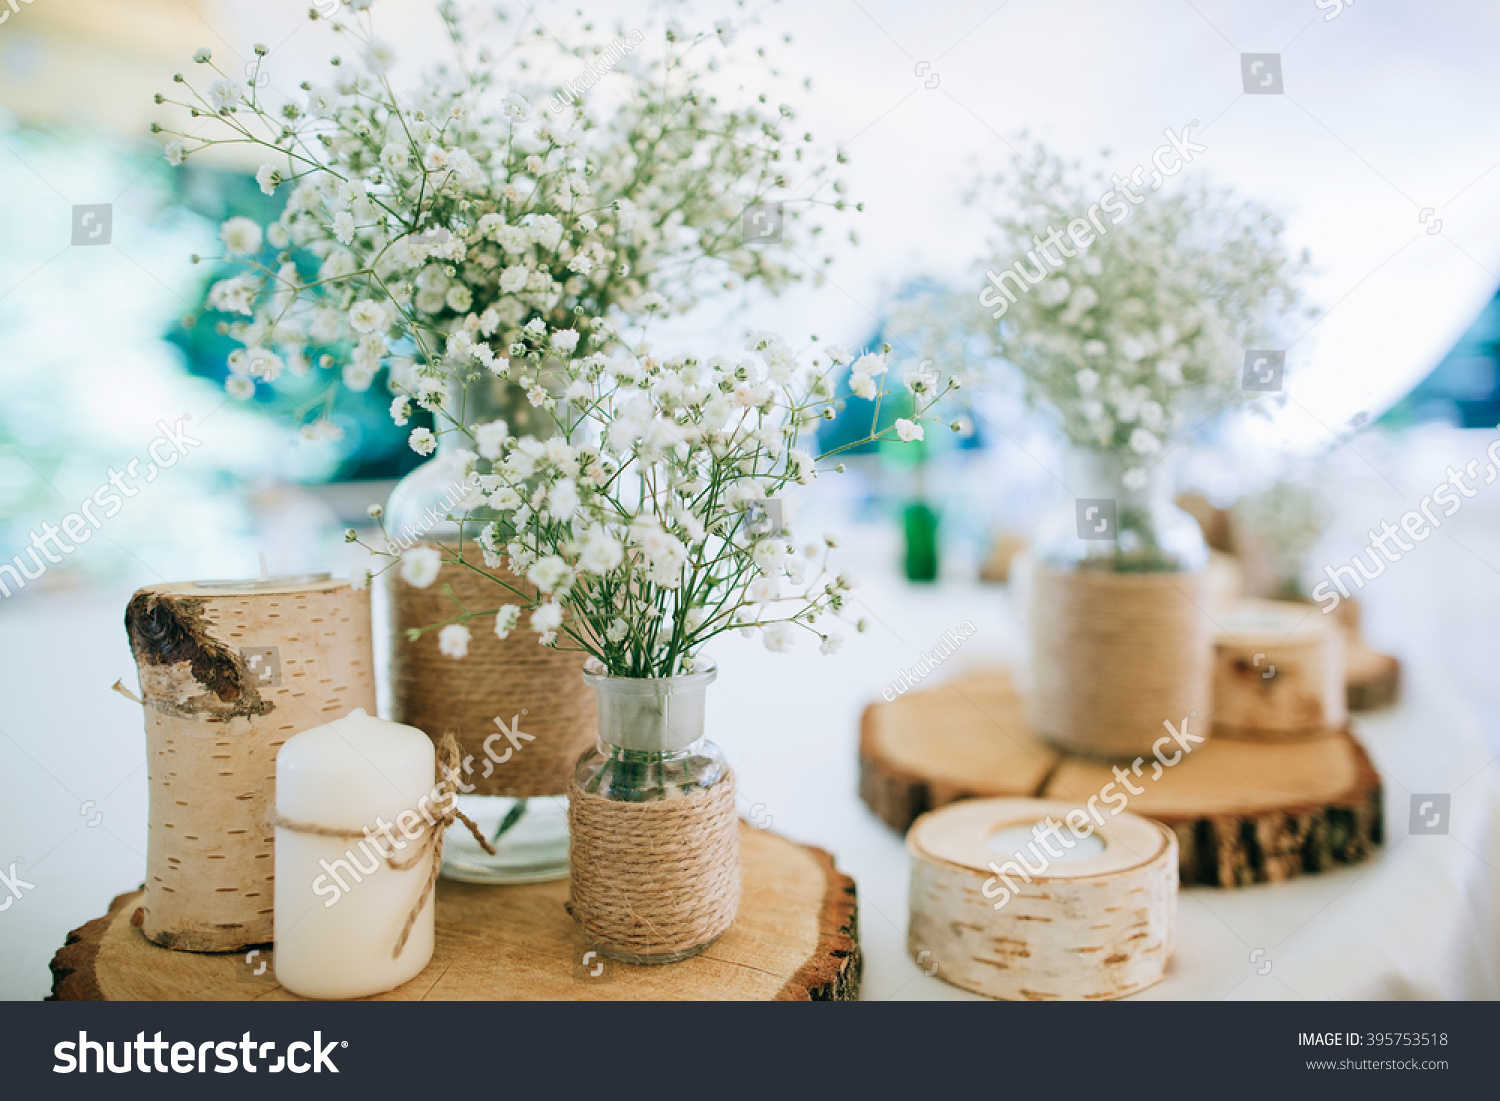 Hand Made  Wedding Decoration, flowers, wood #395753518